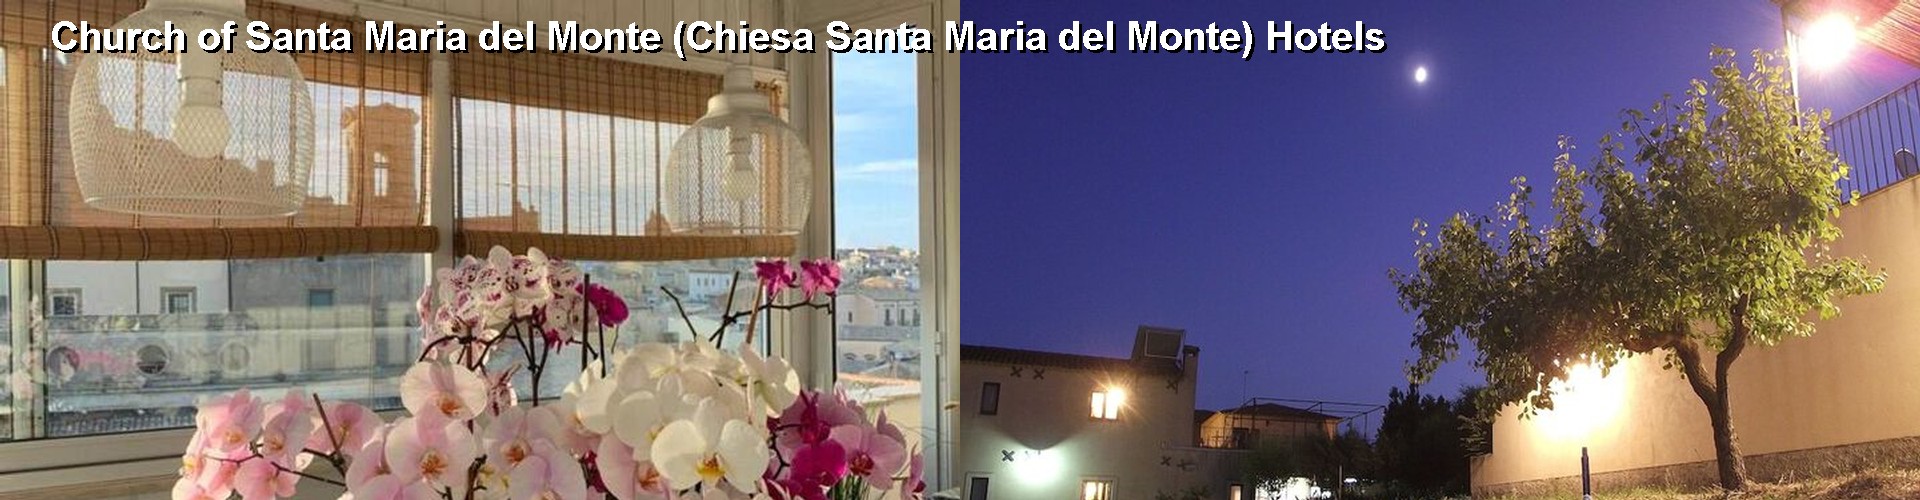 5 Best Hotels near Church of Santa Maria del Monte (Chiesa Santa Maria del Monte)